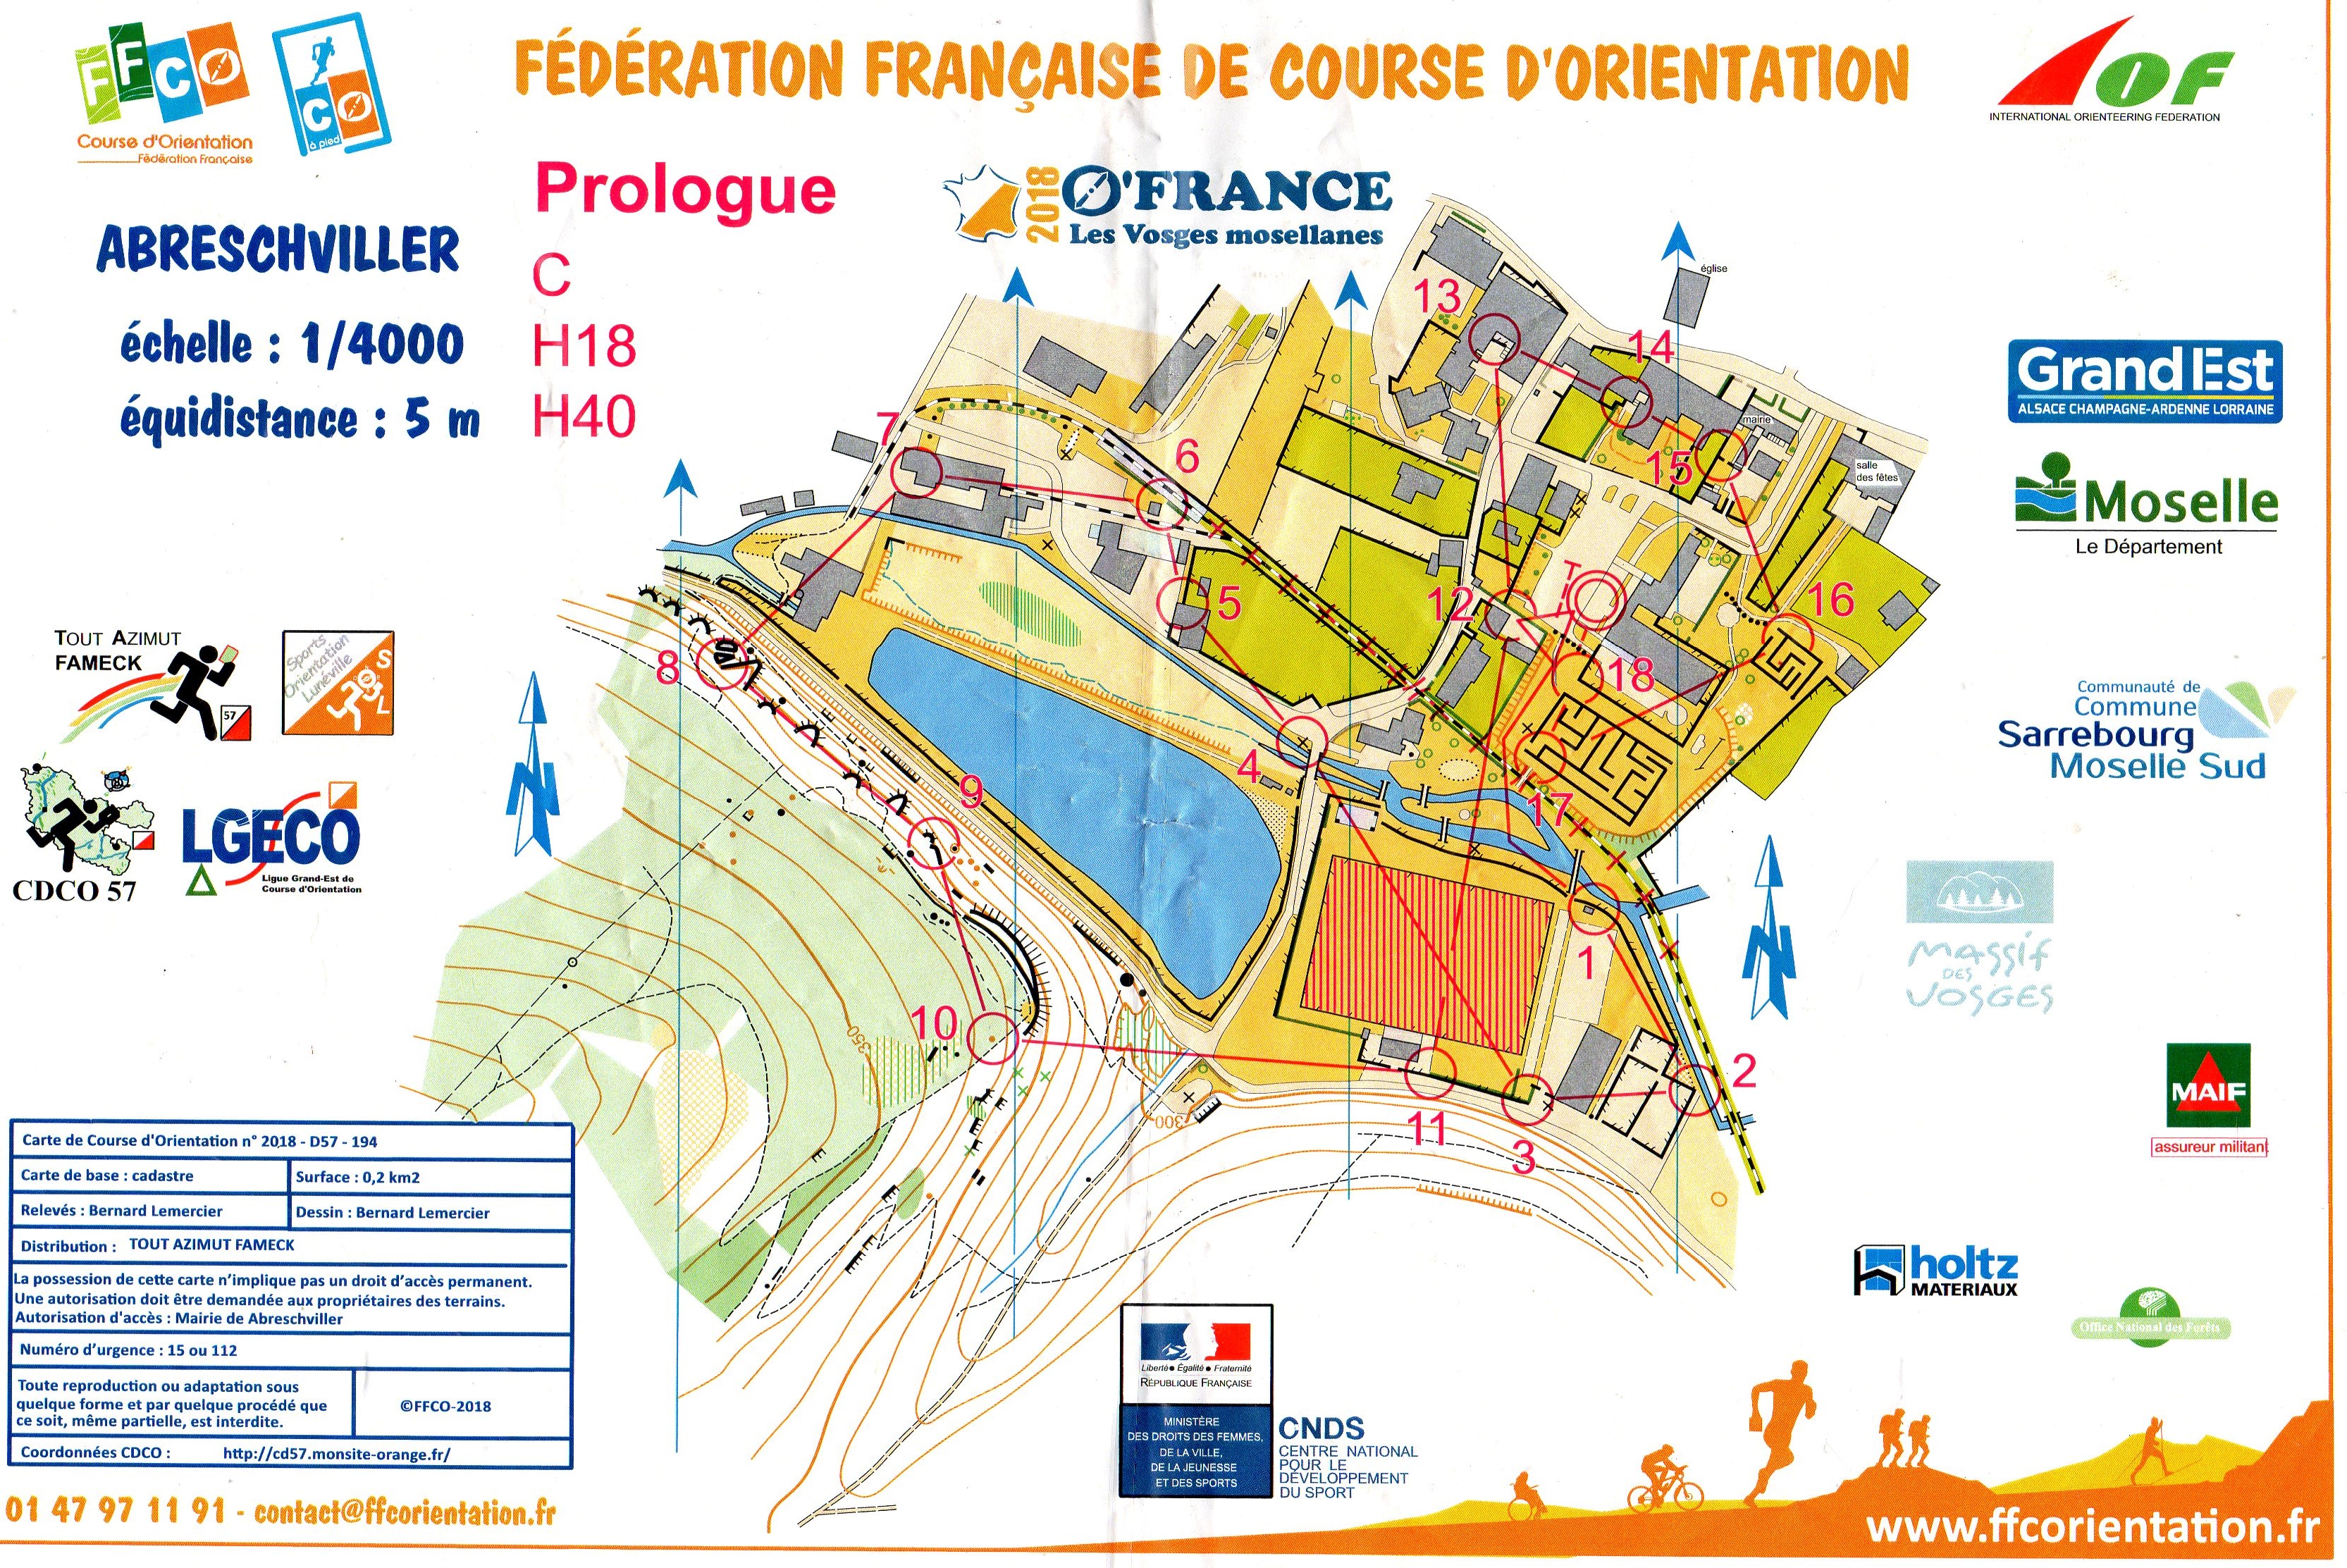 Prologue O'France 2018. Sprint (08.07.2018)